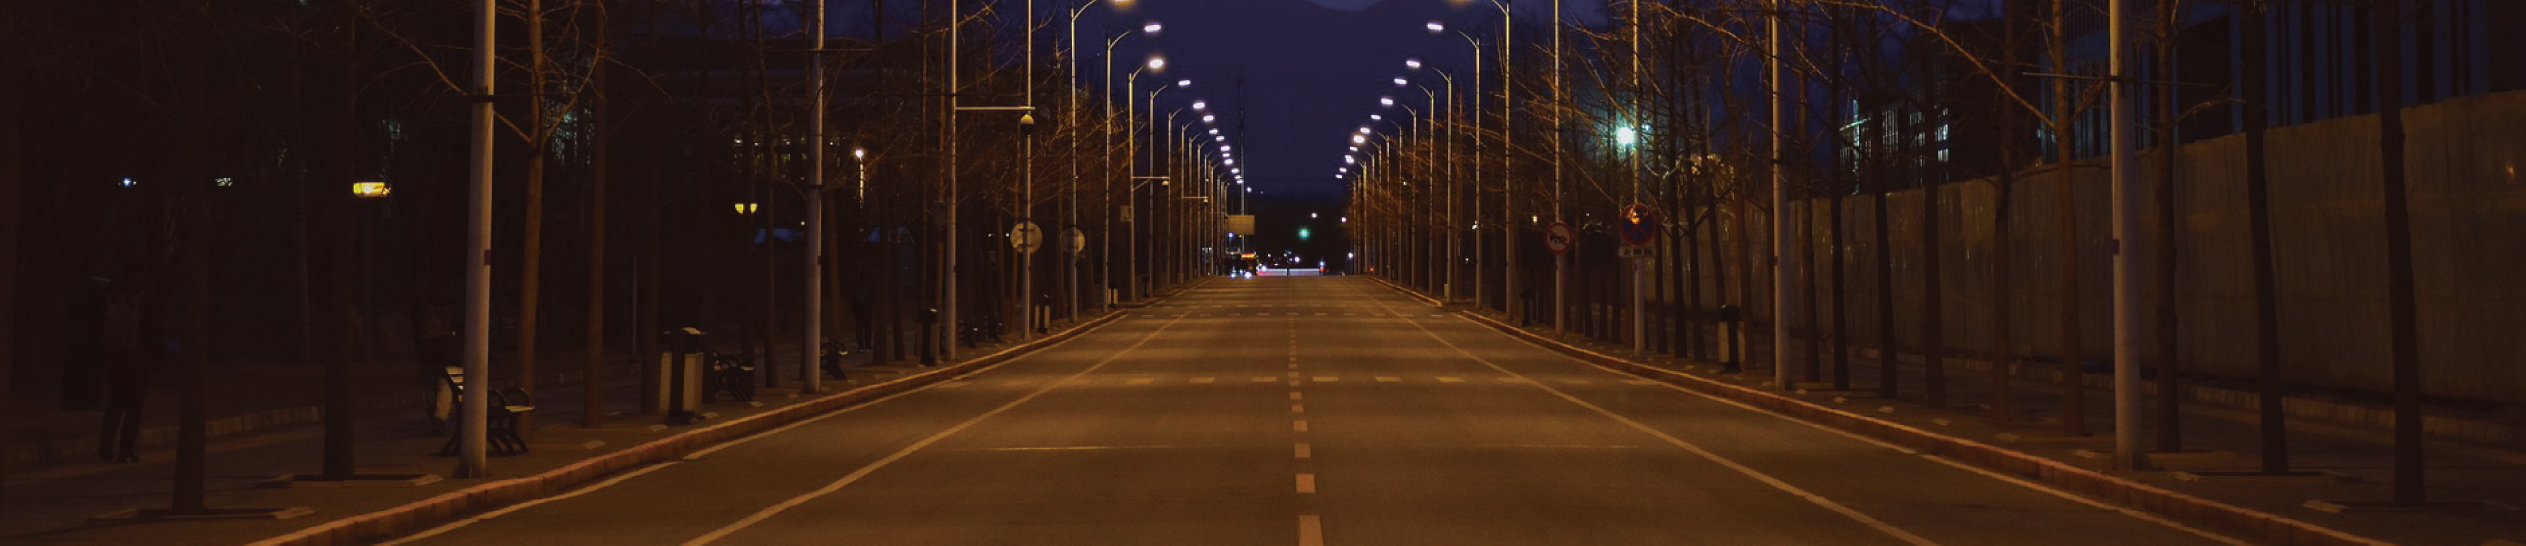 blinking street lights